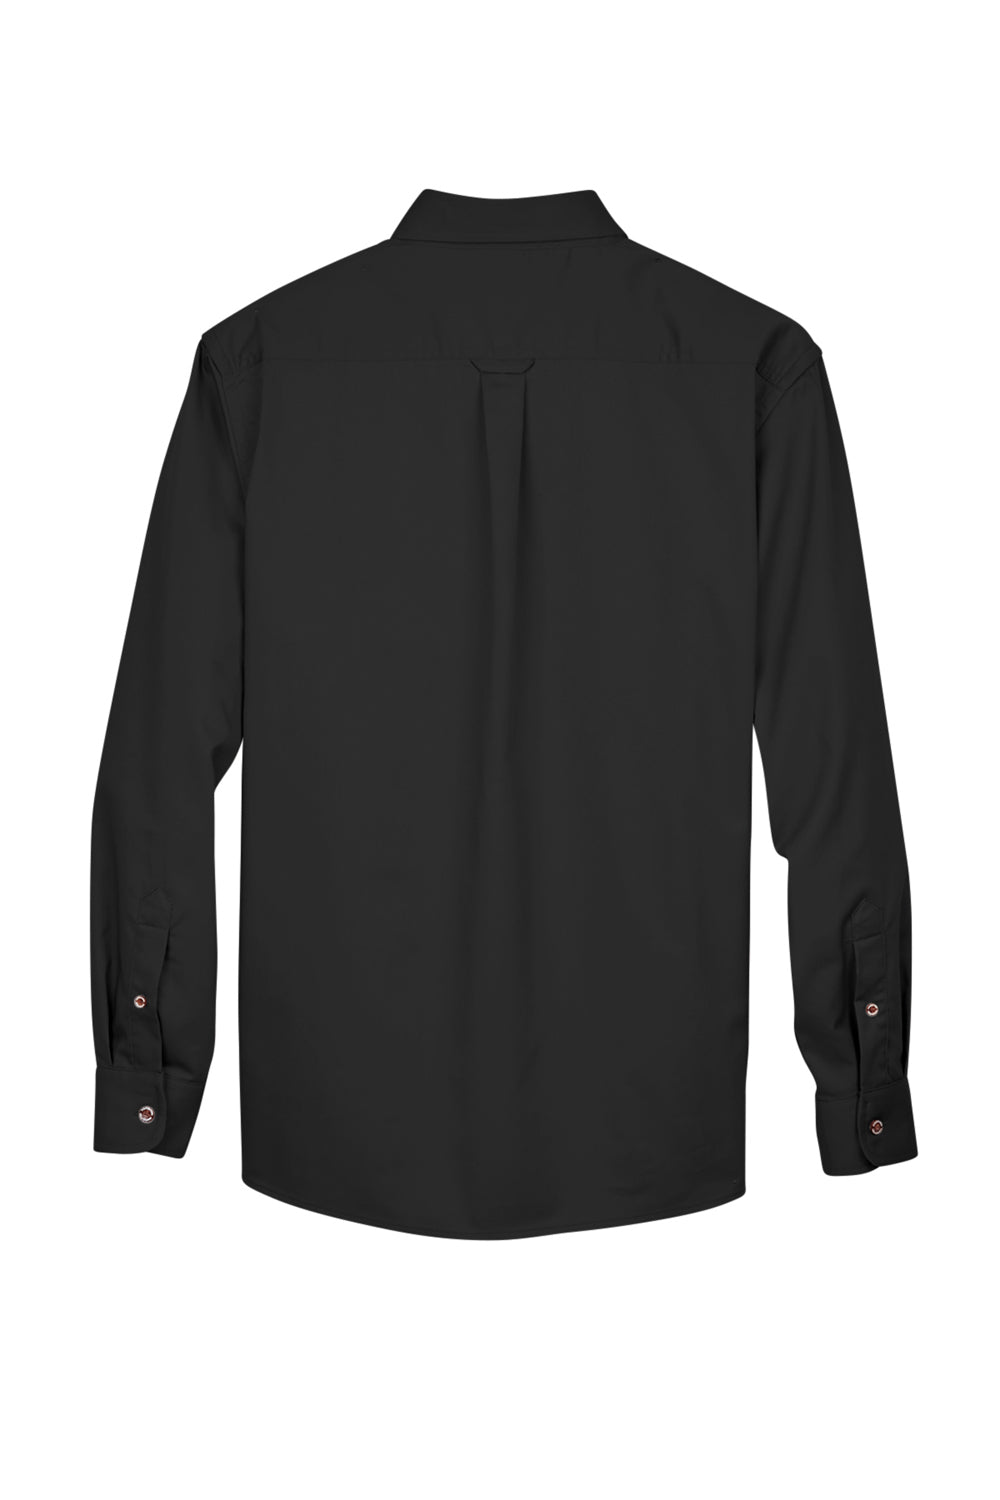 Harriton M500/M500T Wrinkle Resistant Long Sleeve Button Down Shirt w/ Pocket Black Flat Back